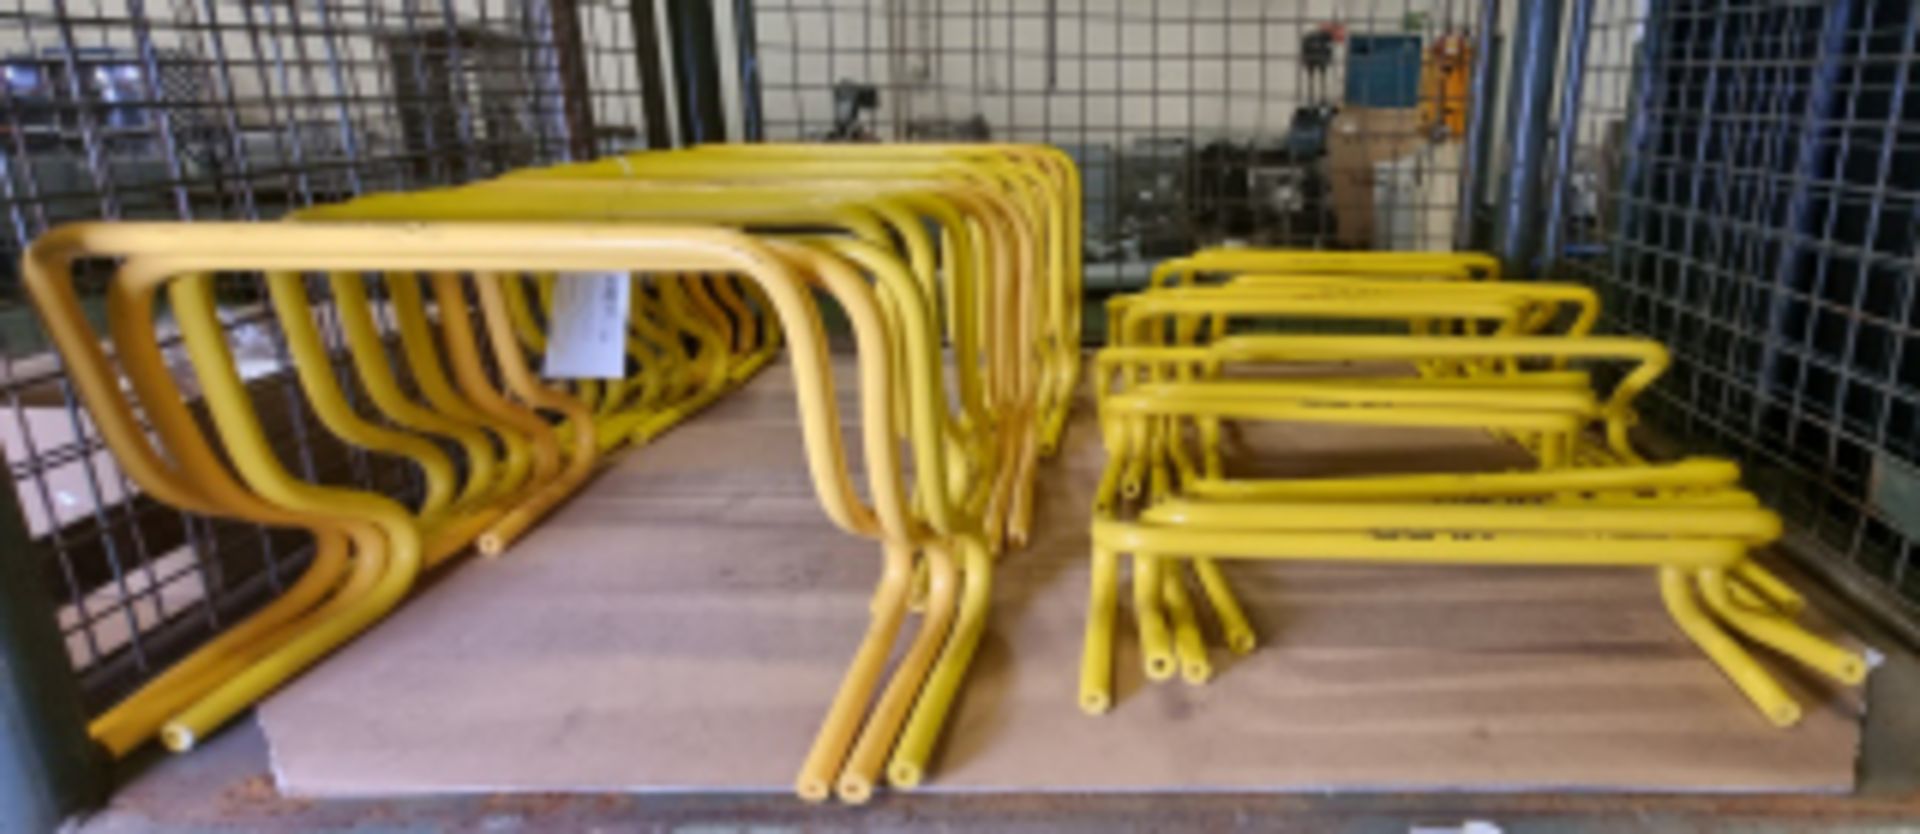 XLR8 yellow plastic training hurdles small - medium 36 units